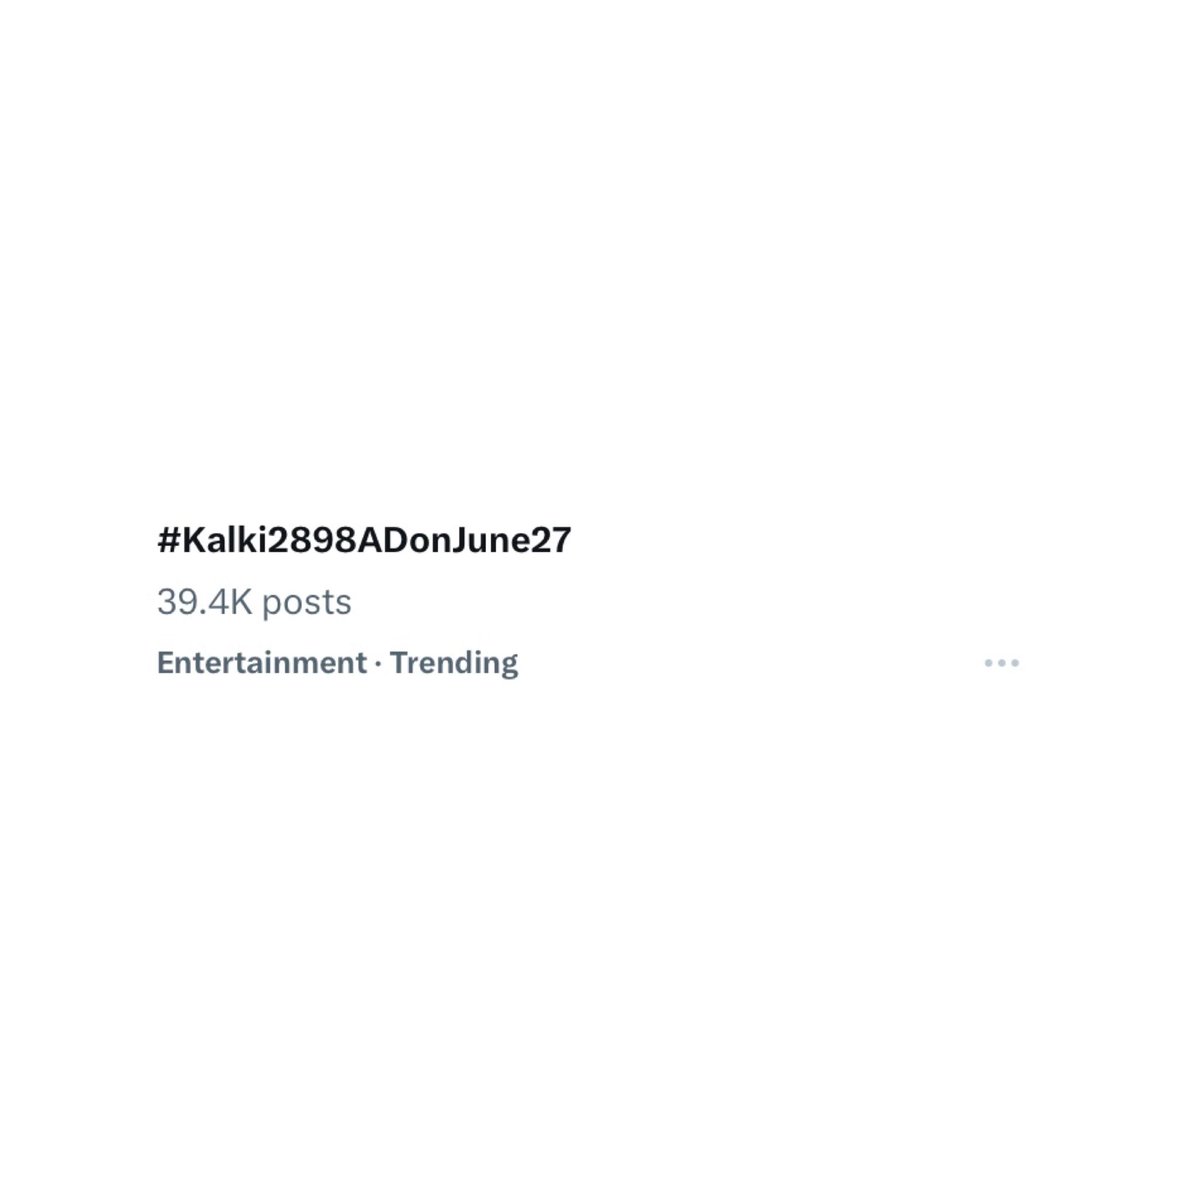 #Kalki2898ADonJune27 is currently trending on Twitter/X #DeepikaPadukone #Prabhas